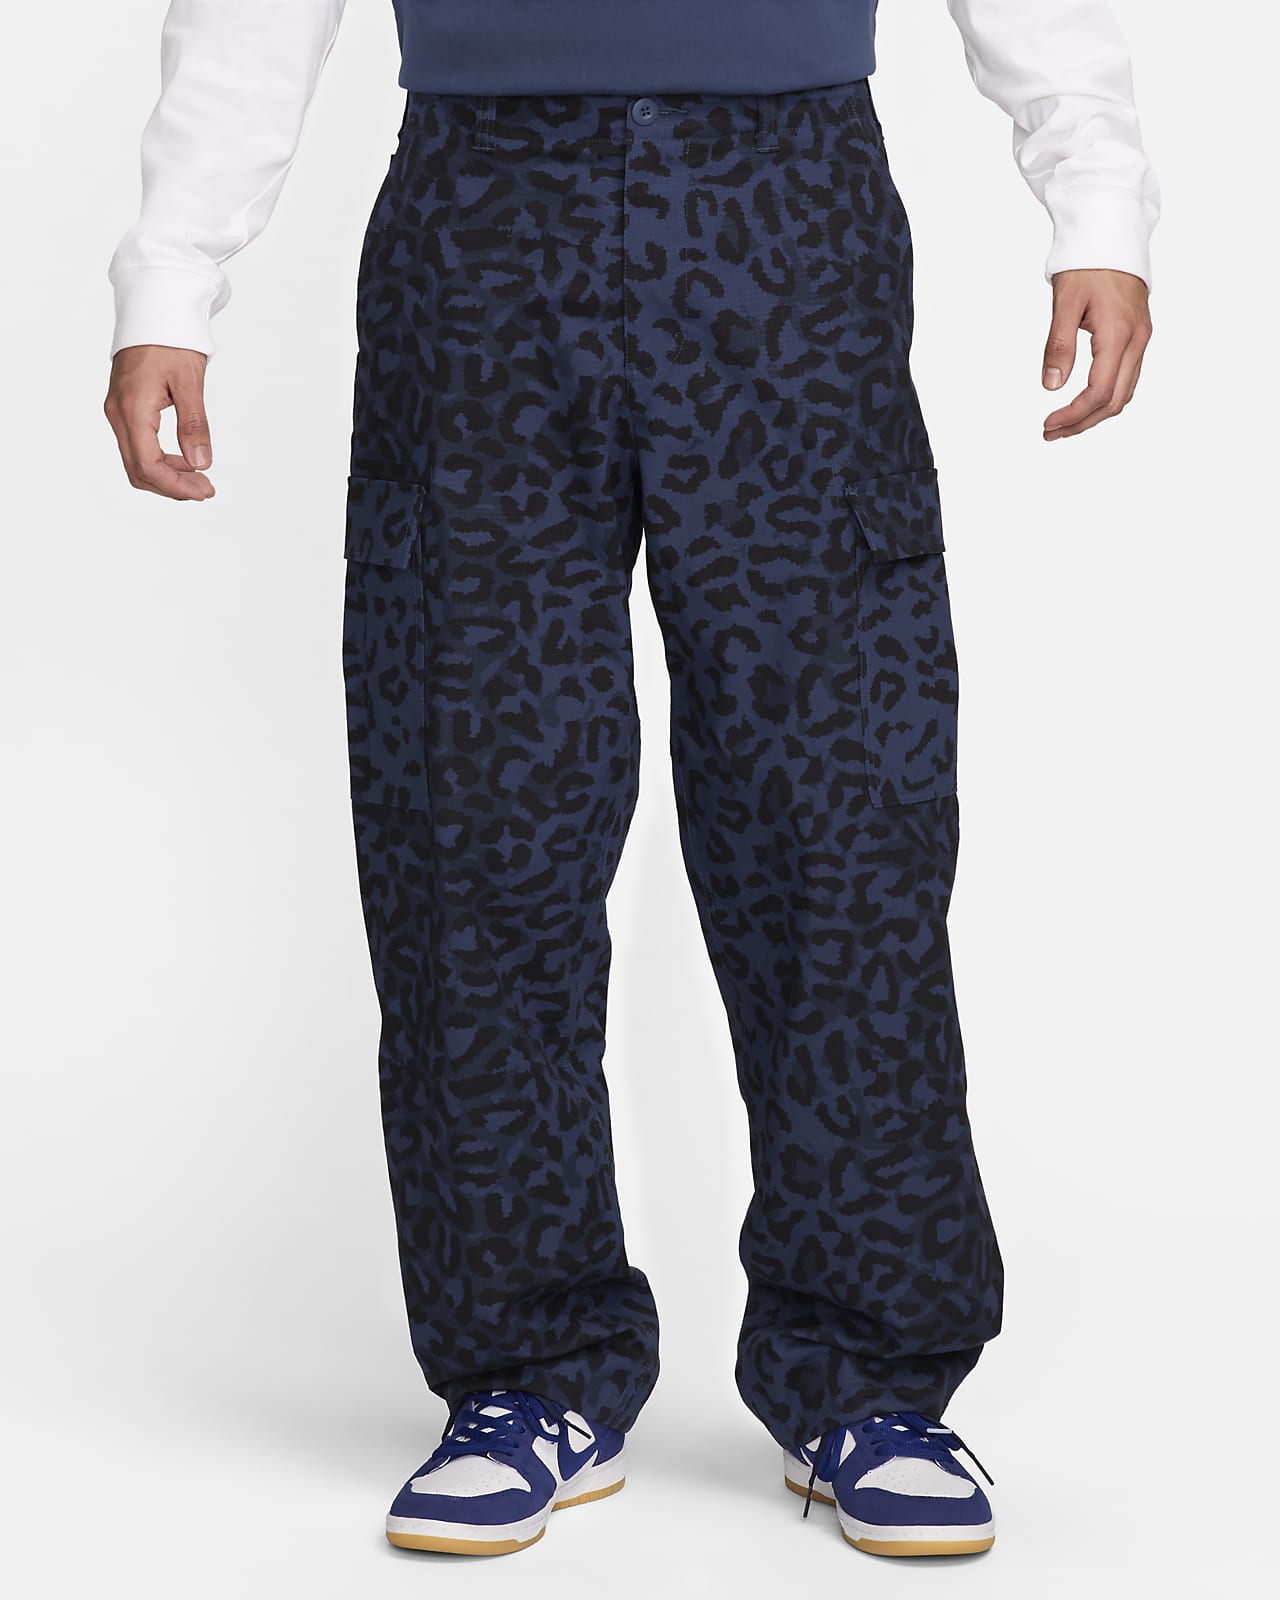 Nike SB Kearny Men's Allover Print Cargo Pants